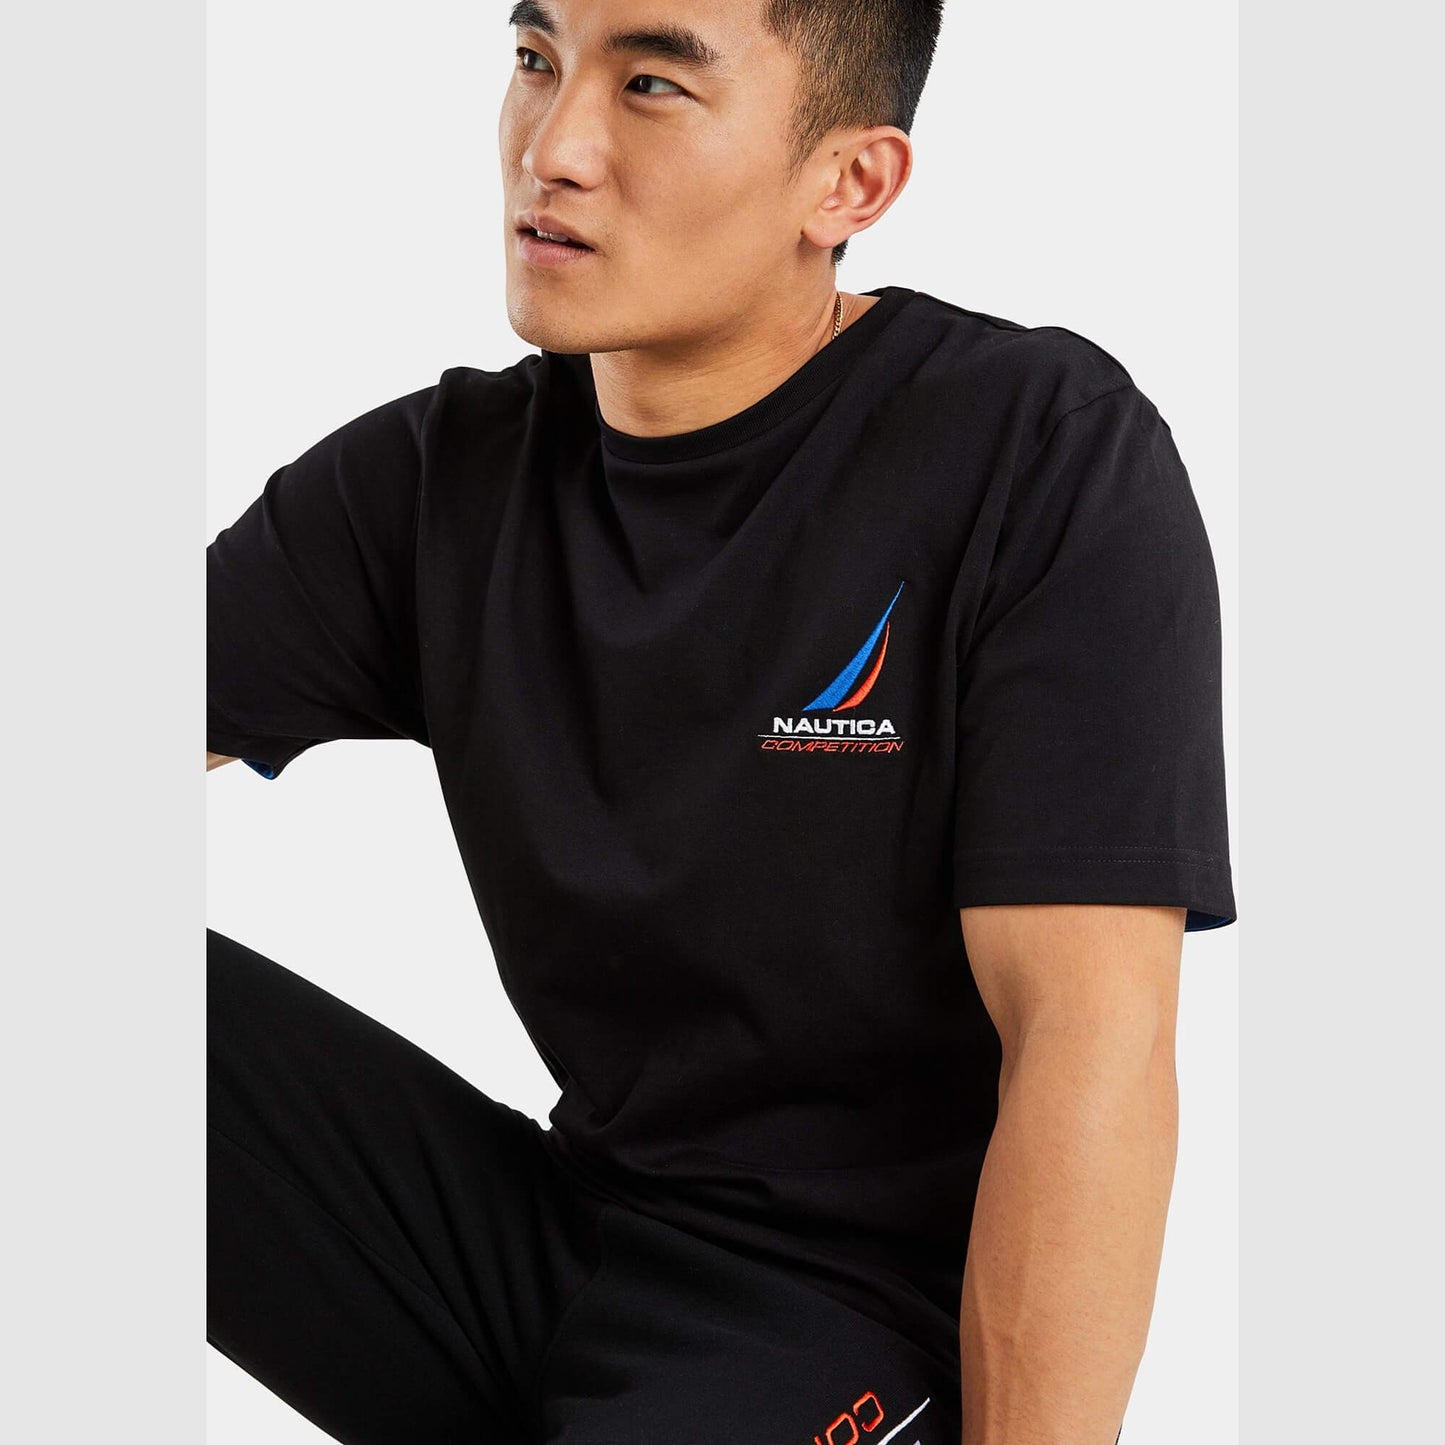 Nautica Dandy T-Shirt Black